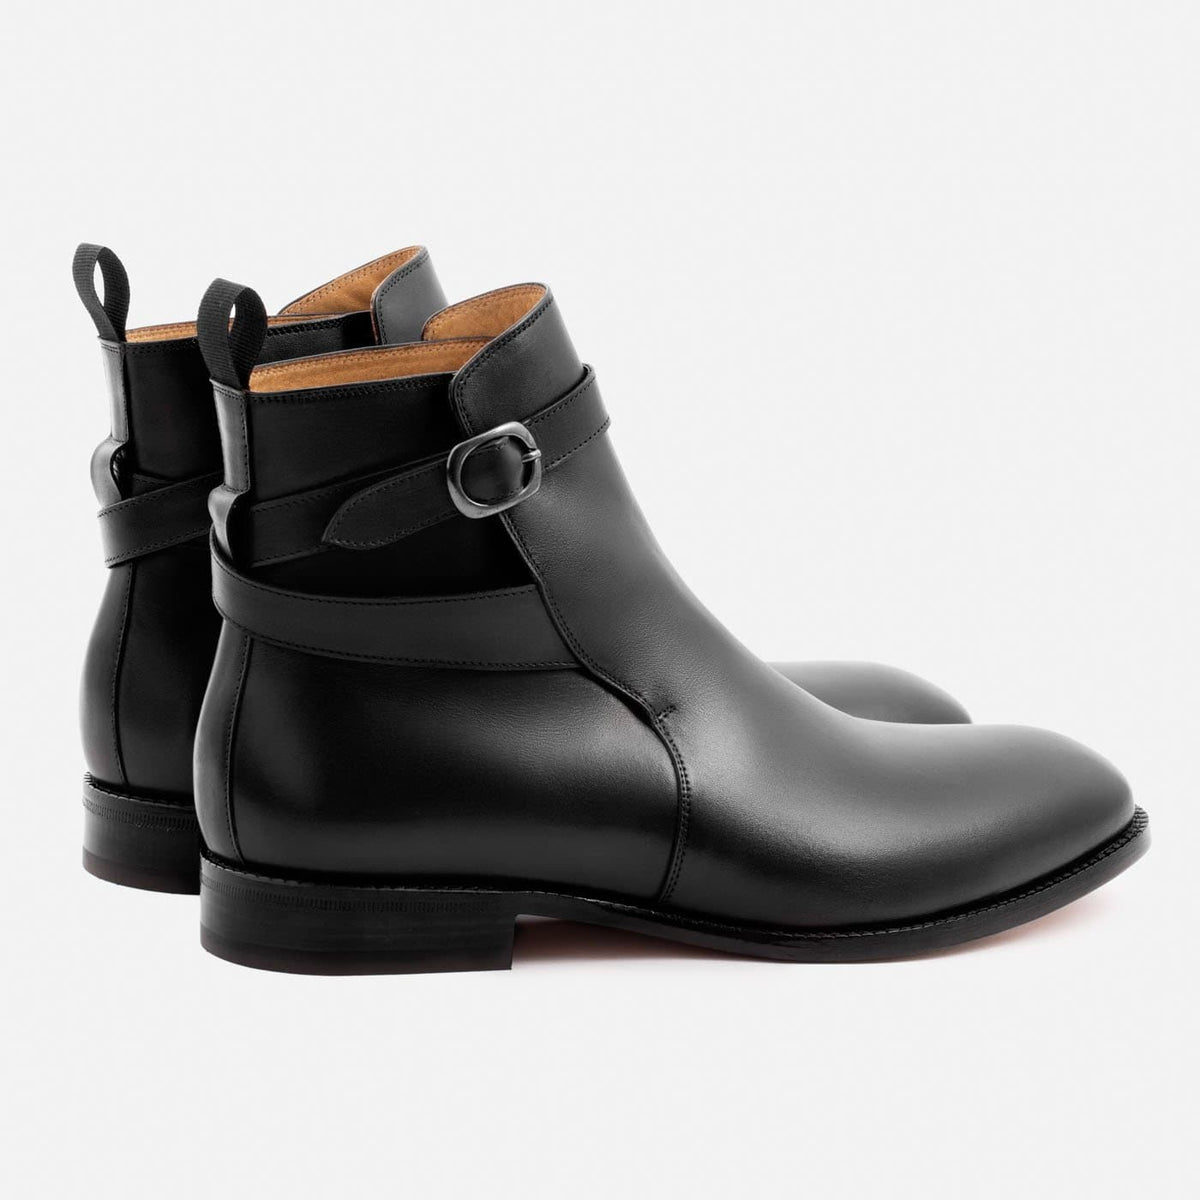 black jodphur boots